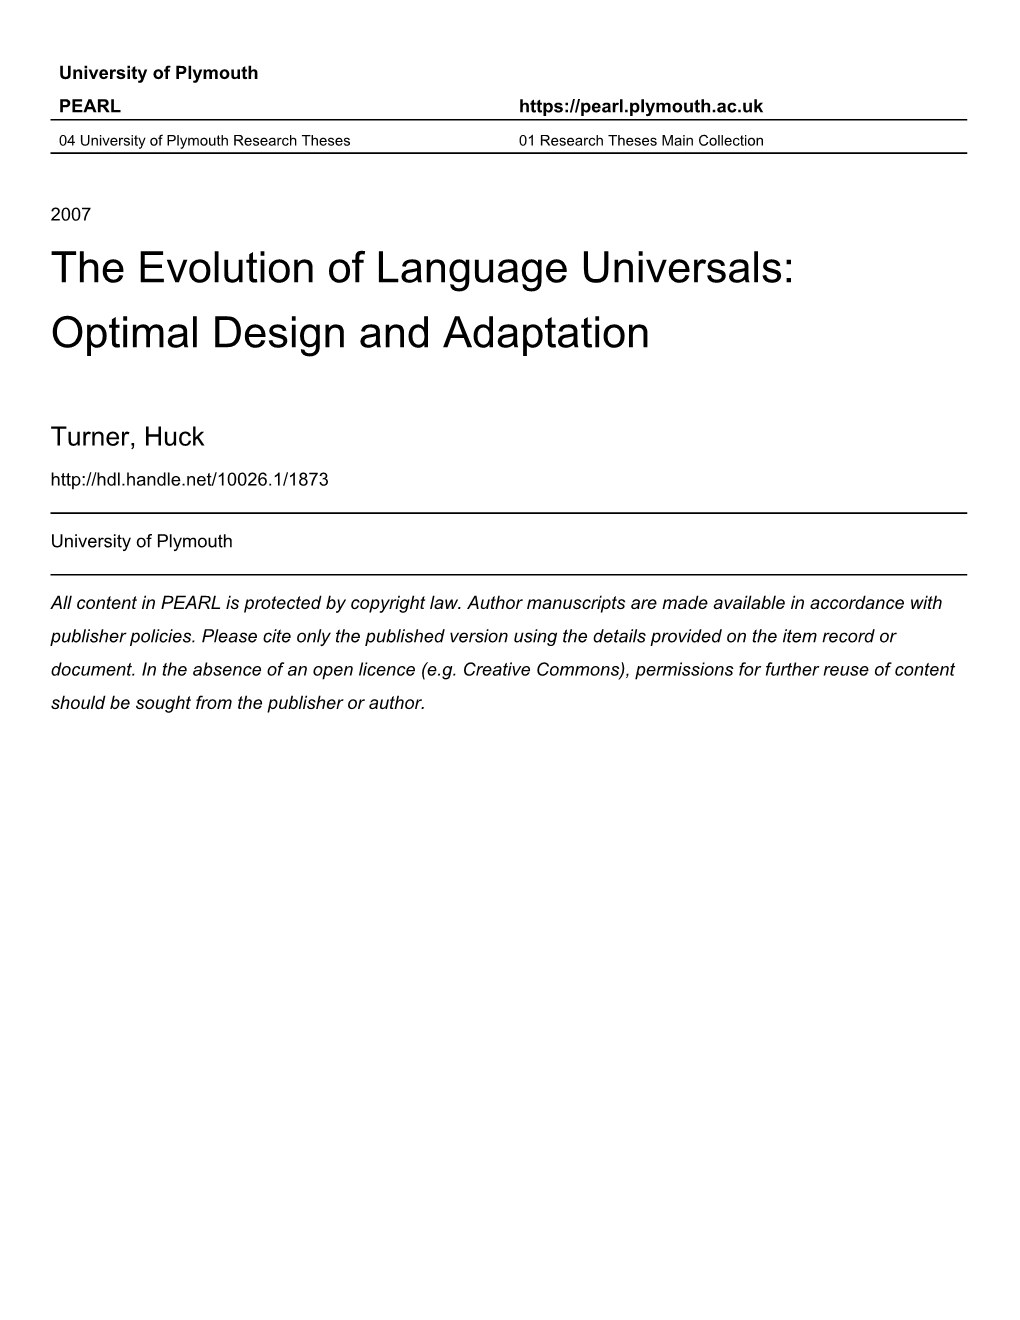 The Evolution of Language Universals Optimal Design and Adaptation